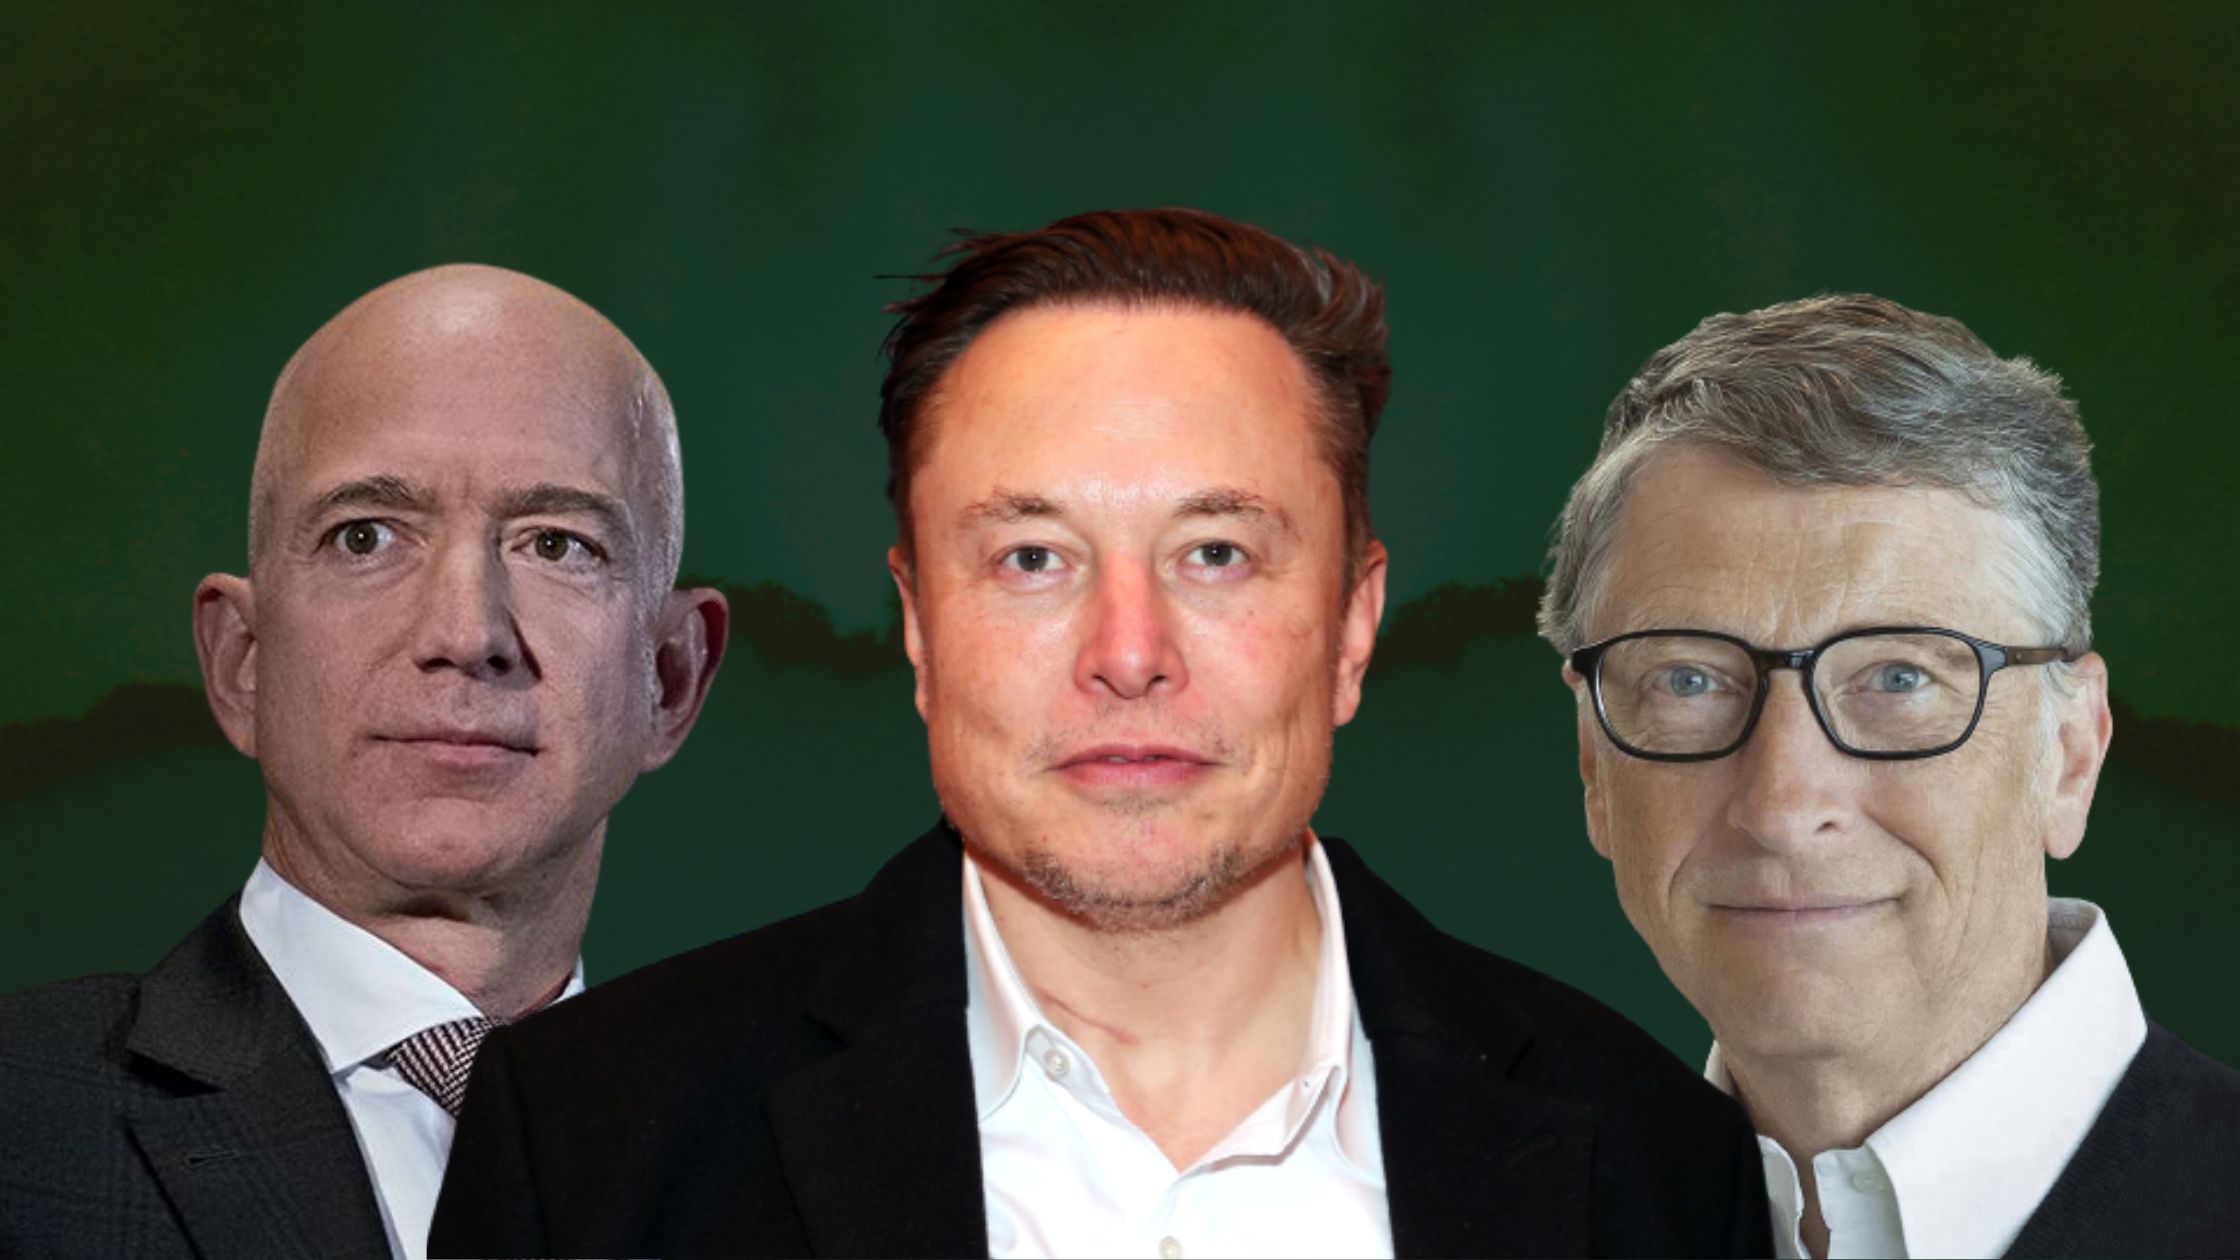 Top 10 Richest Tech Billionaires in the World